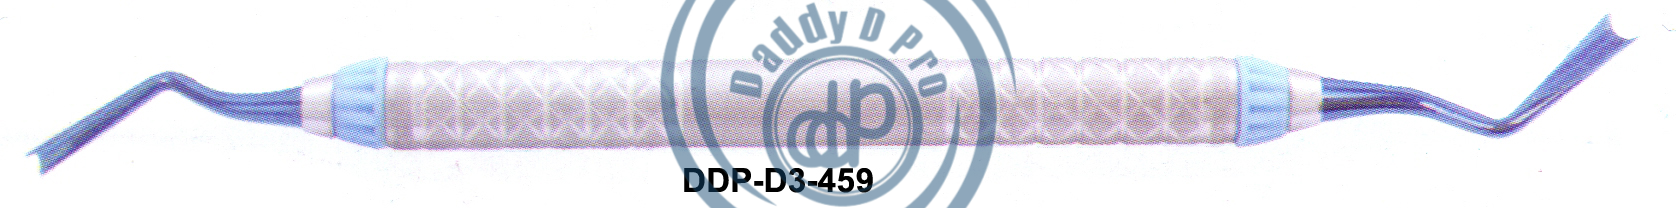 images/DDP-D3-459.png